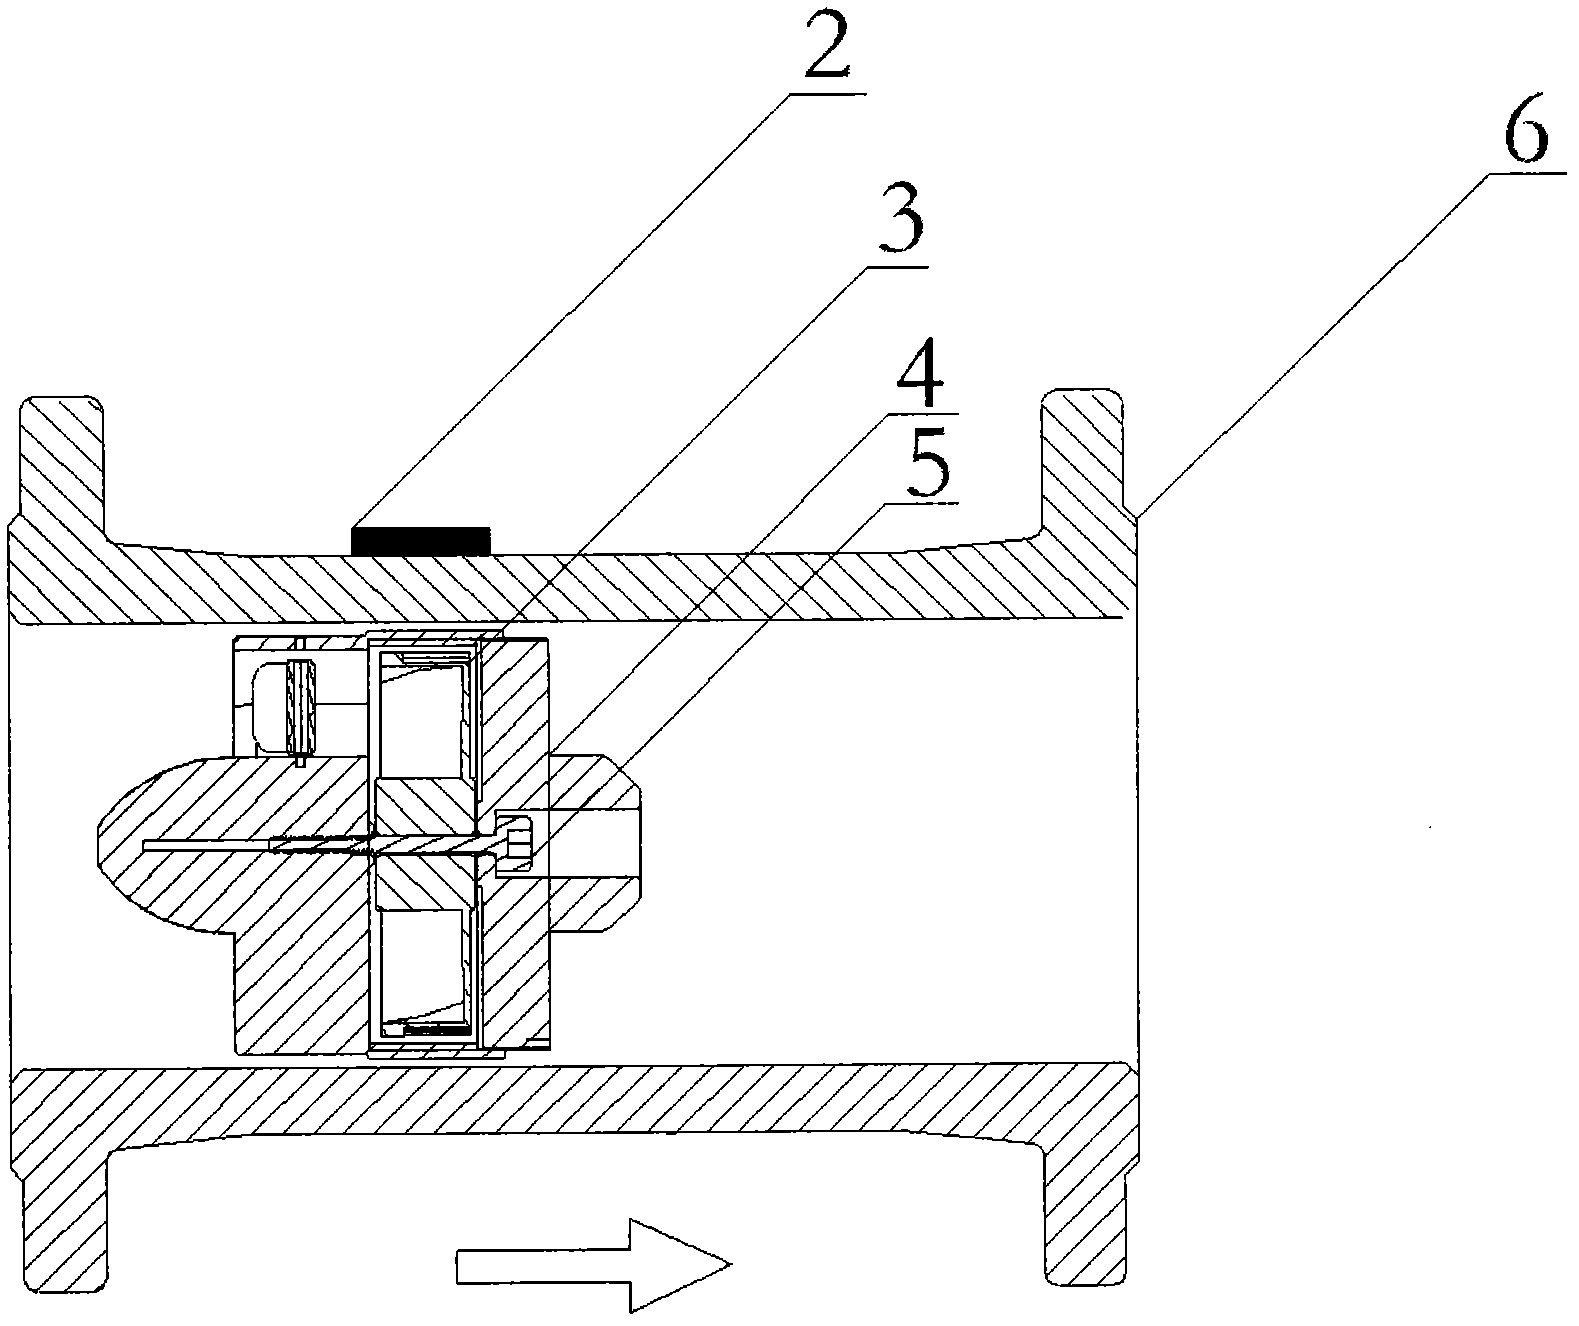 Vertical single impeller type flow rate sensing device